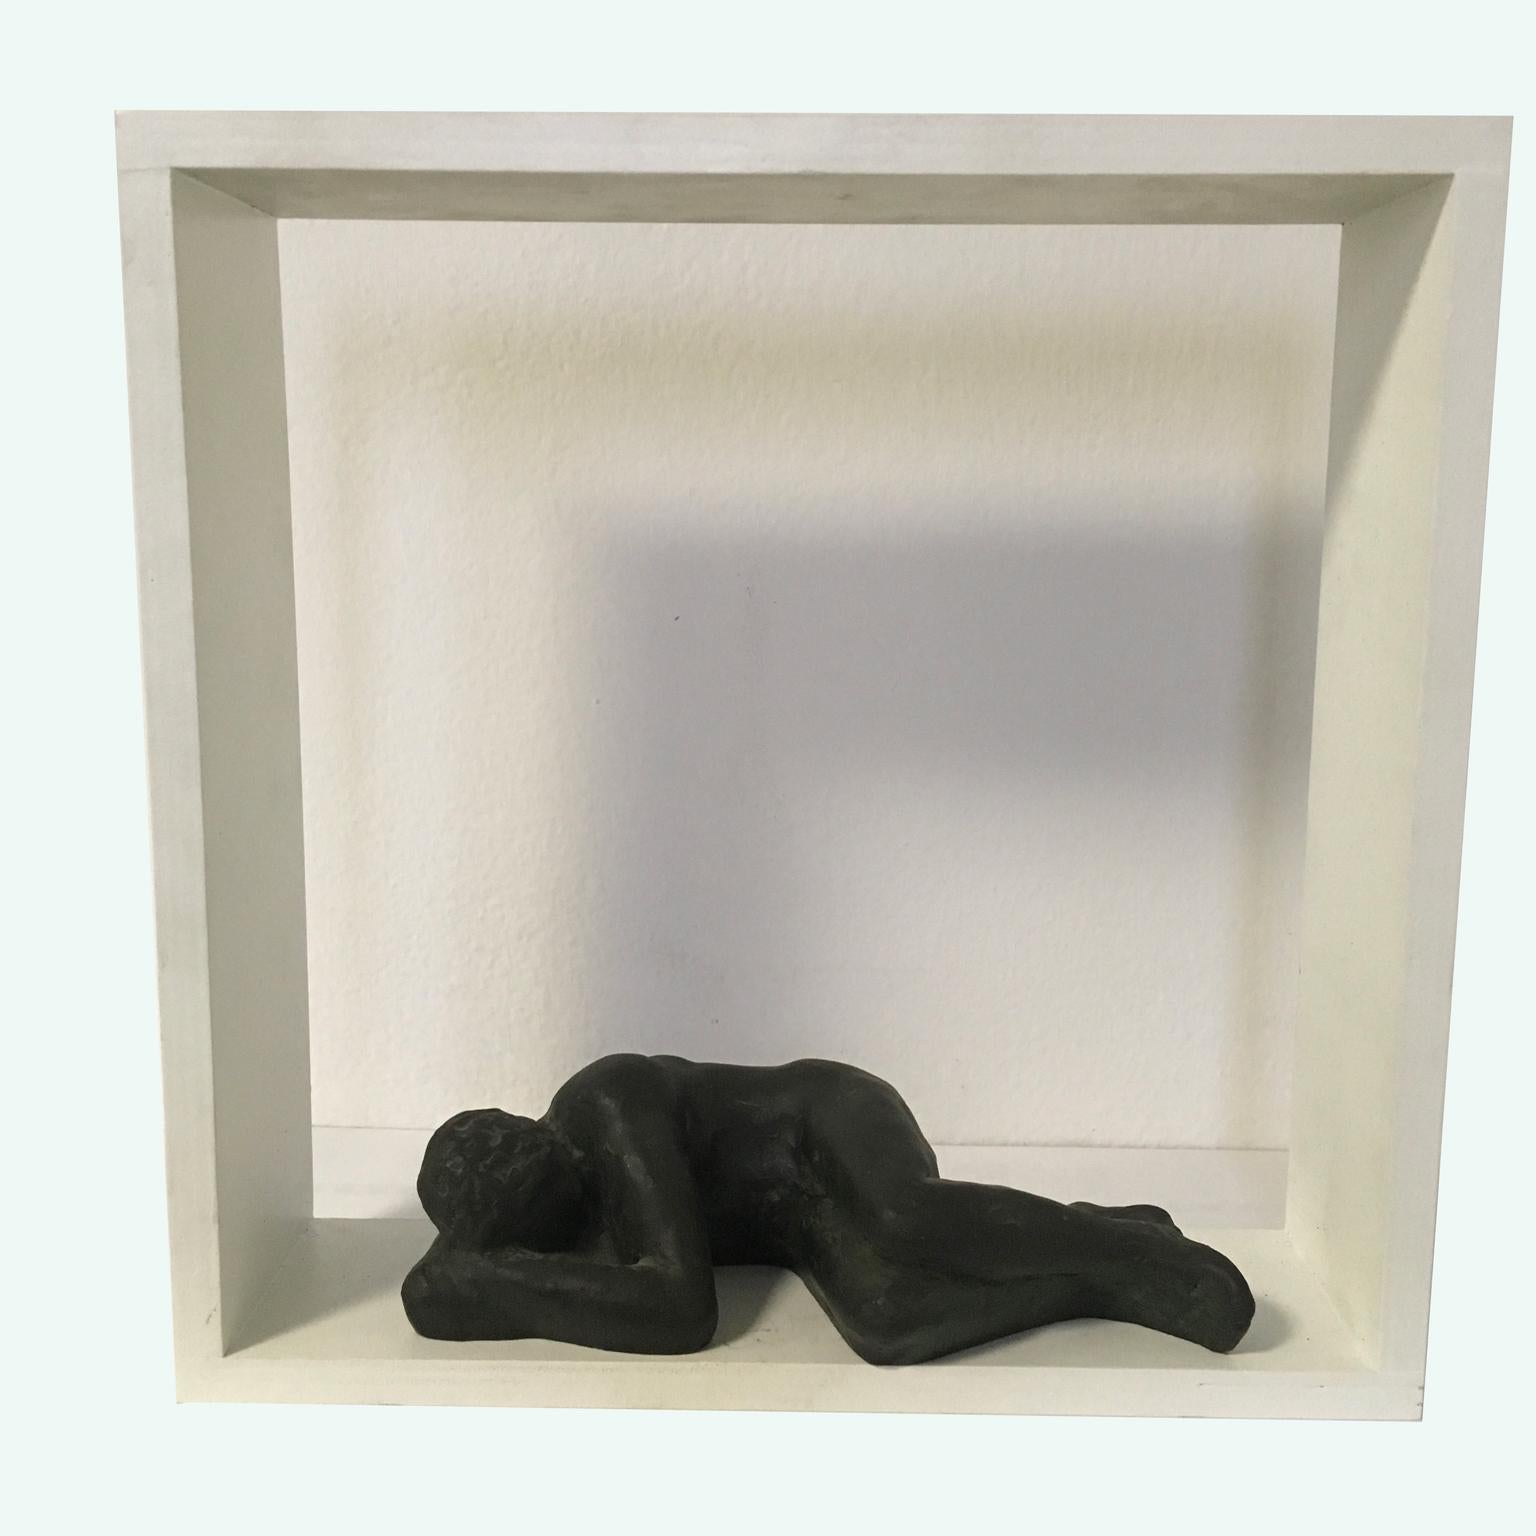 Body endormi de Sergio Monari 1985 - Sculpture figurative en bronze patiné coulé